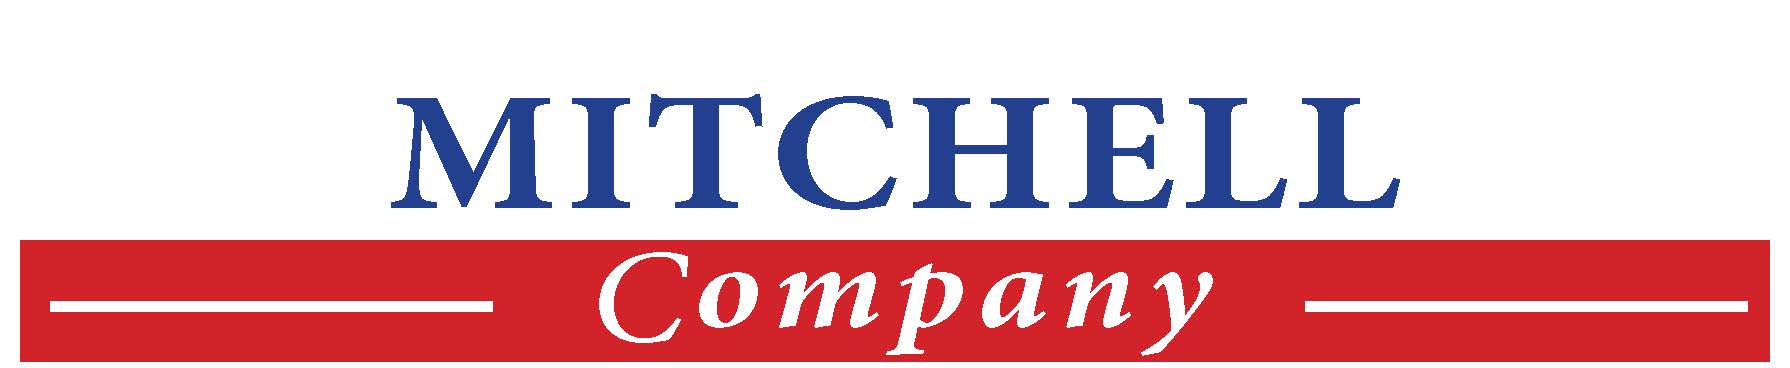 The Mitchell Company